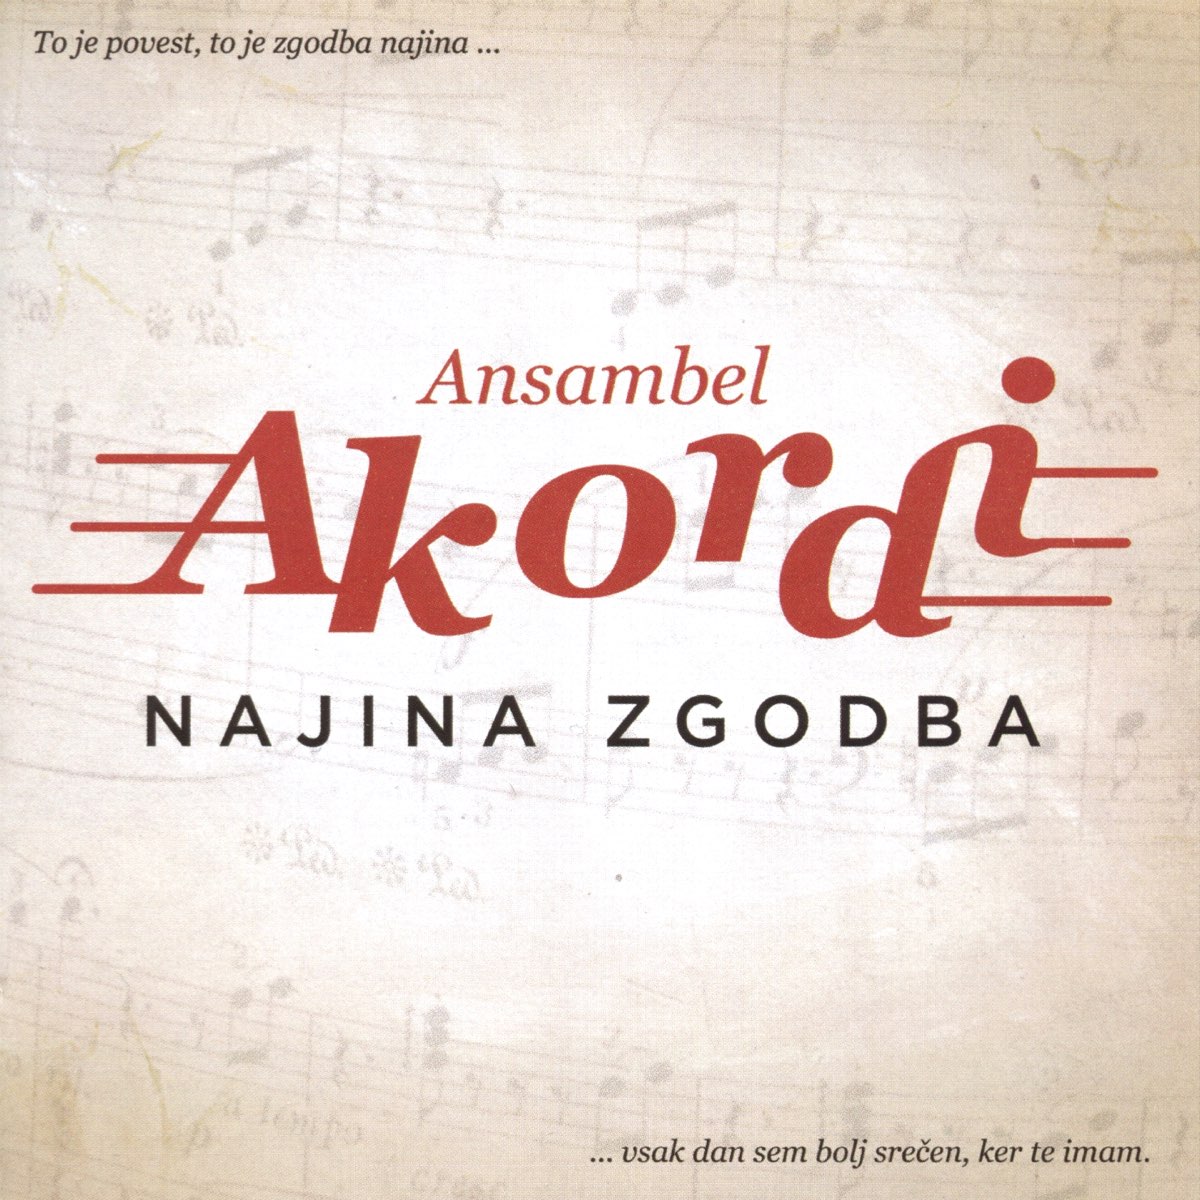 Najina Zgodba - Album by Ansambel Akordi - Apple Music